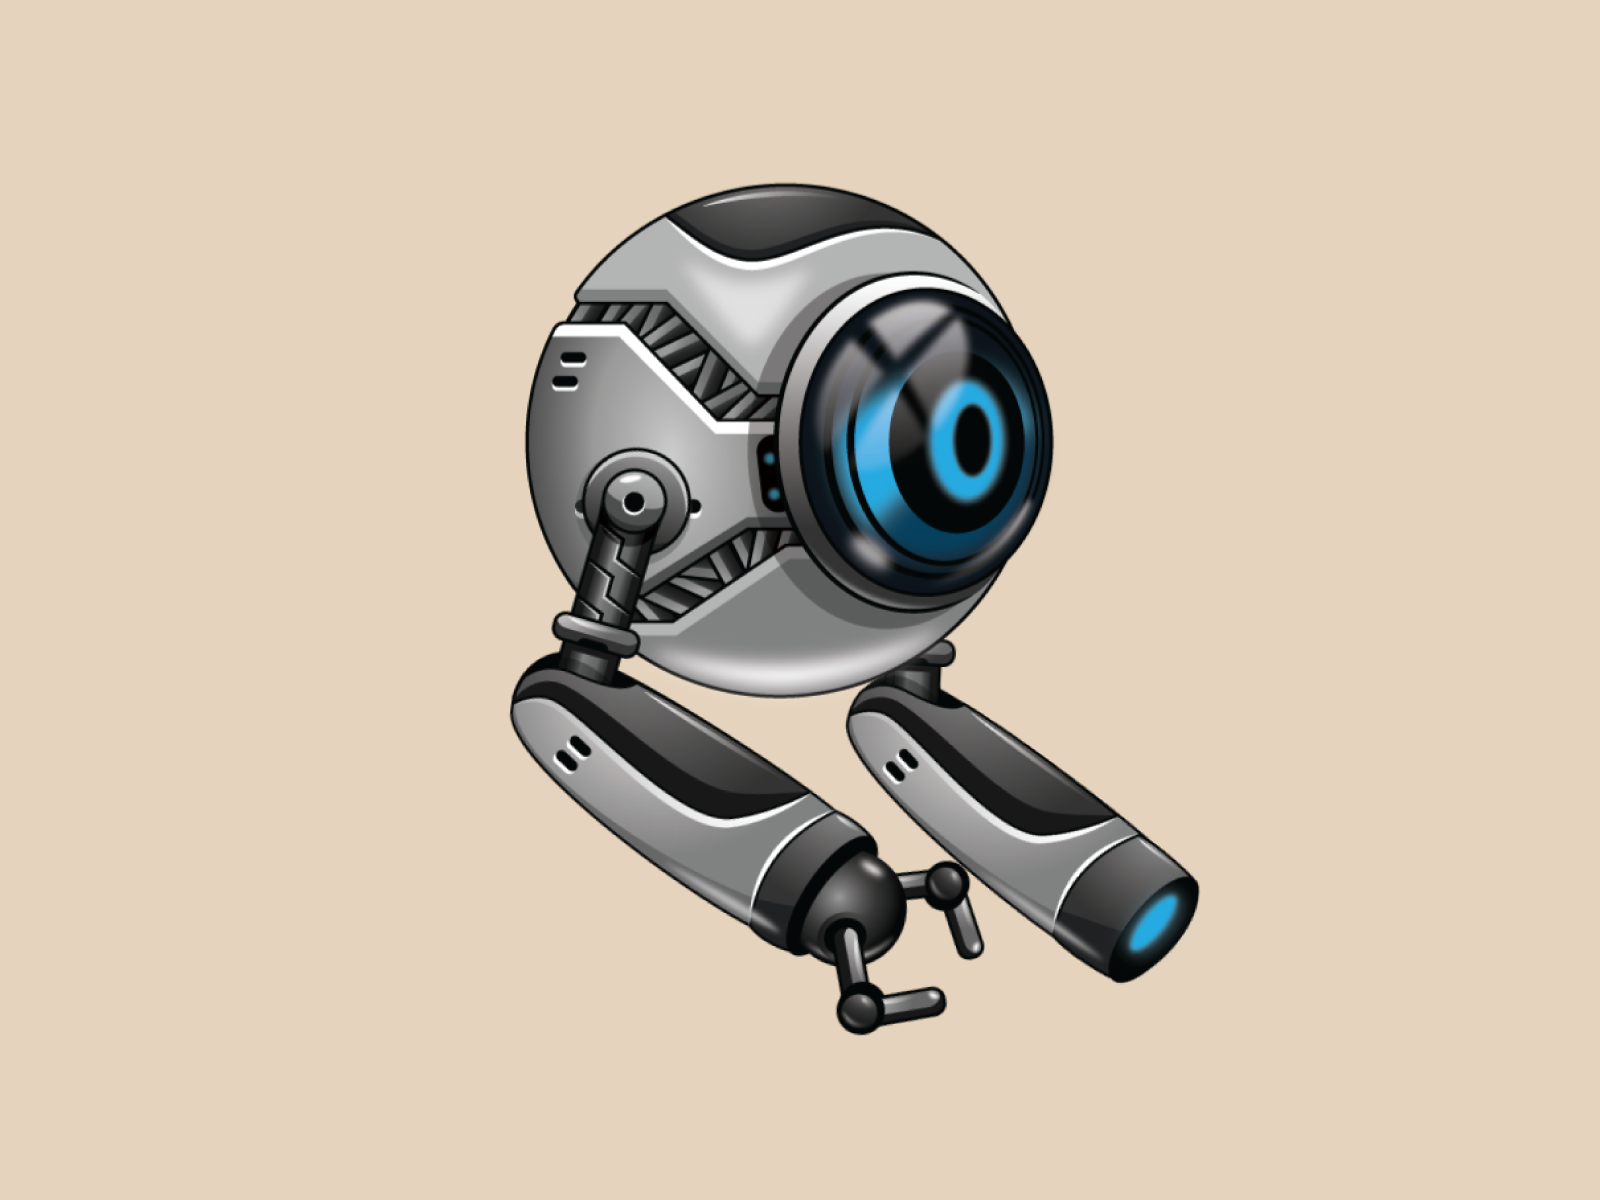 Kæreste Flyve drage Merchandising One eye robot game asset sprites character by bevouliin on Dribbble